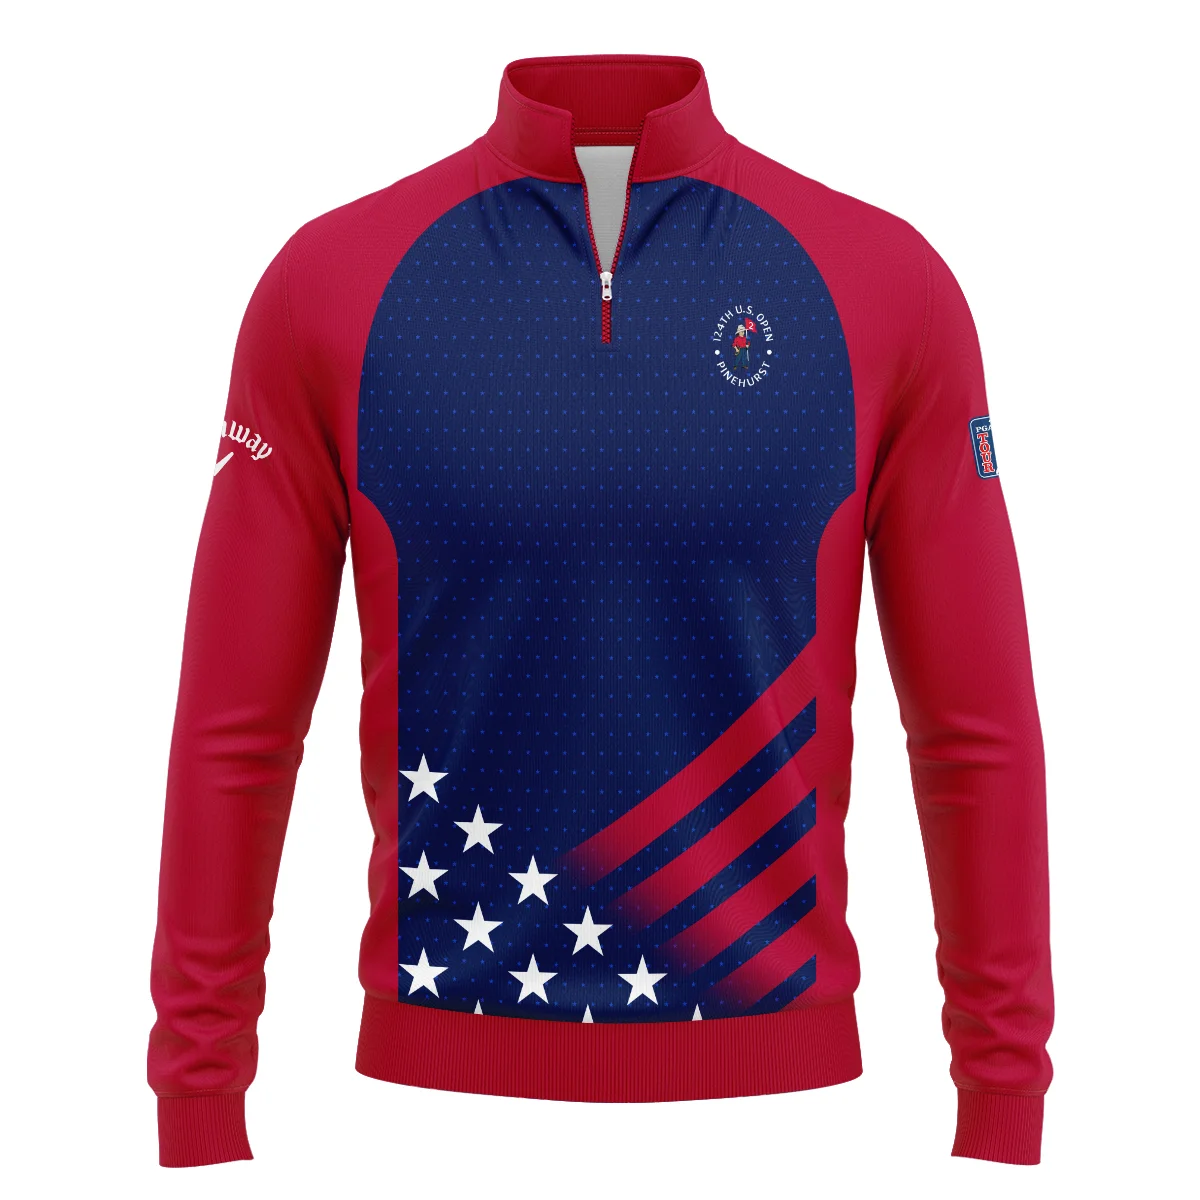 Callaway 124th U.S. Open Pinehurst Star White Dark Blue Red Background Vneck Polo Shirt Style Classic Polo Shirt For Men